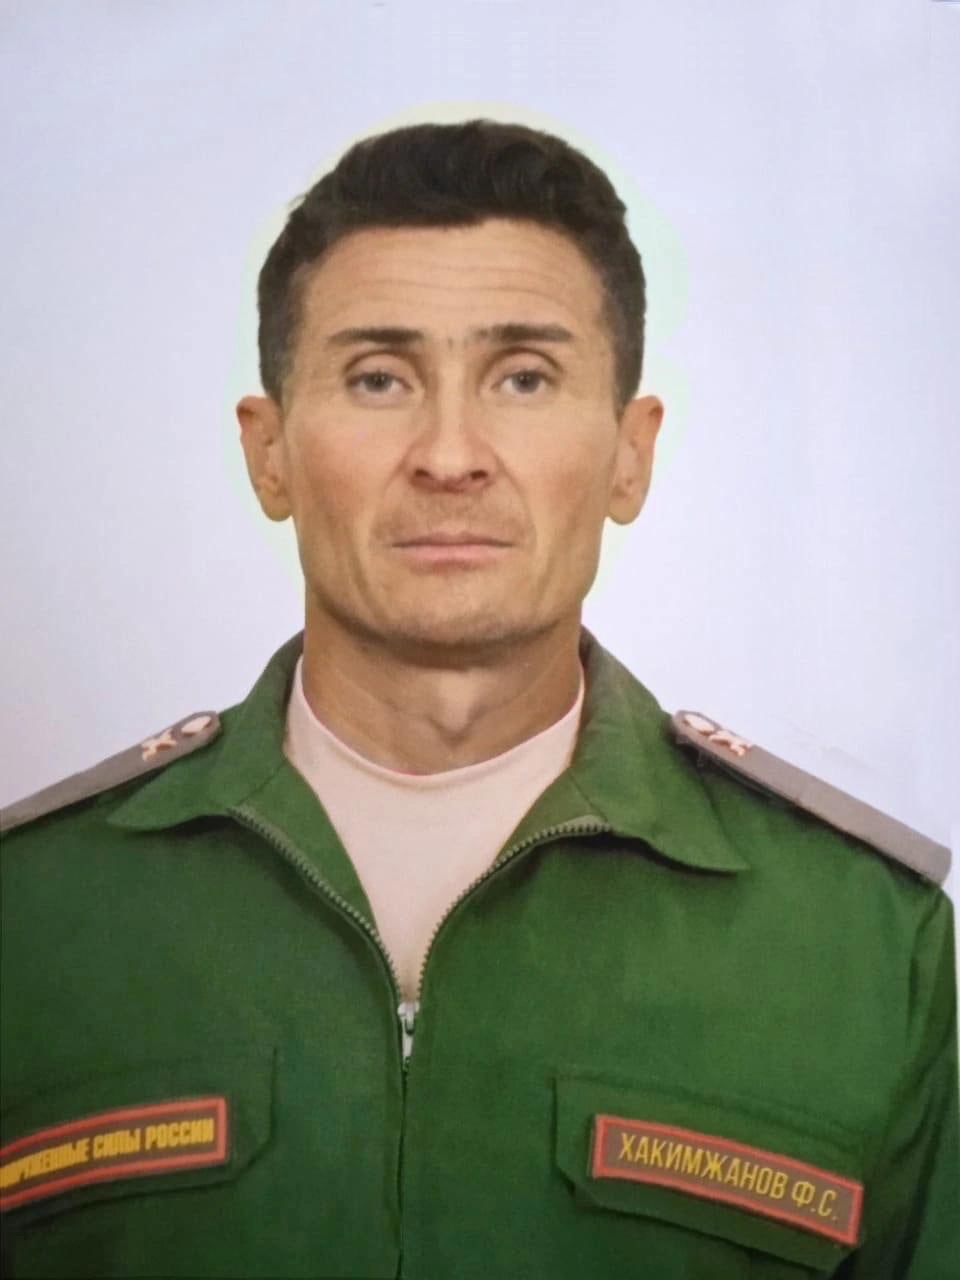 Faritzhan Khakimzhanov